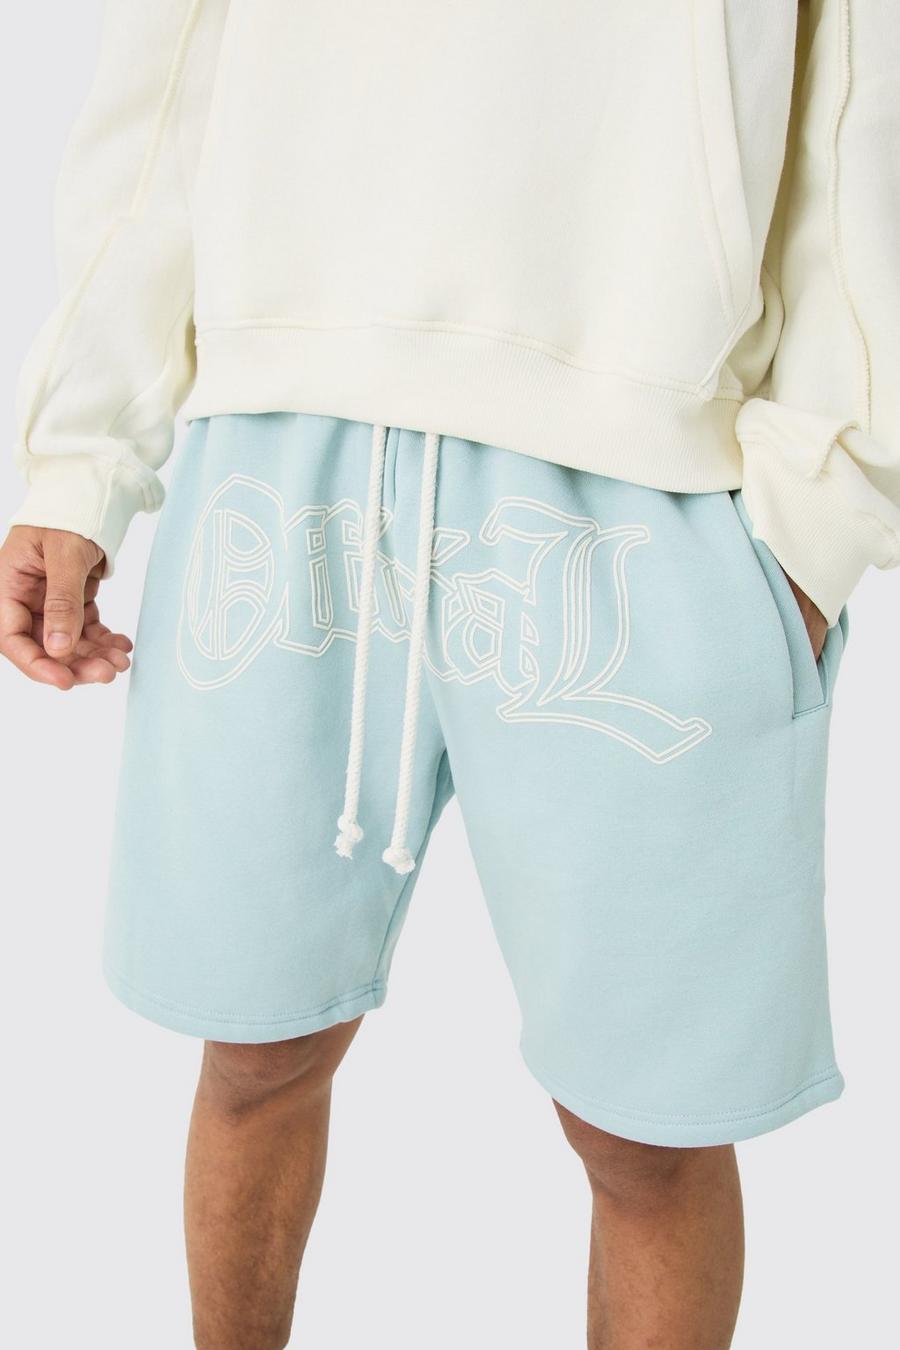 Lockere Shorts mit Official-Print, Light blue